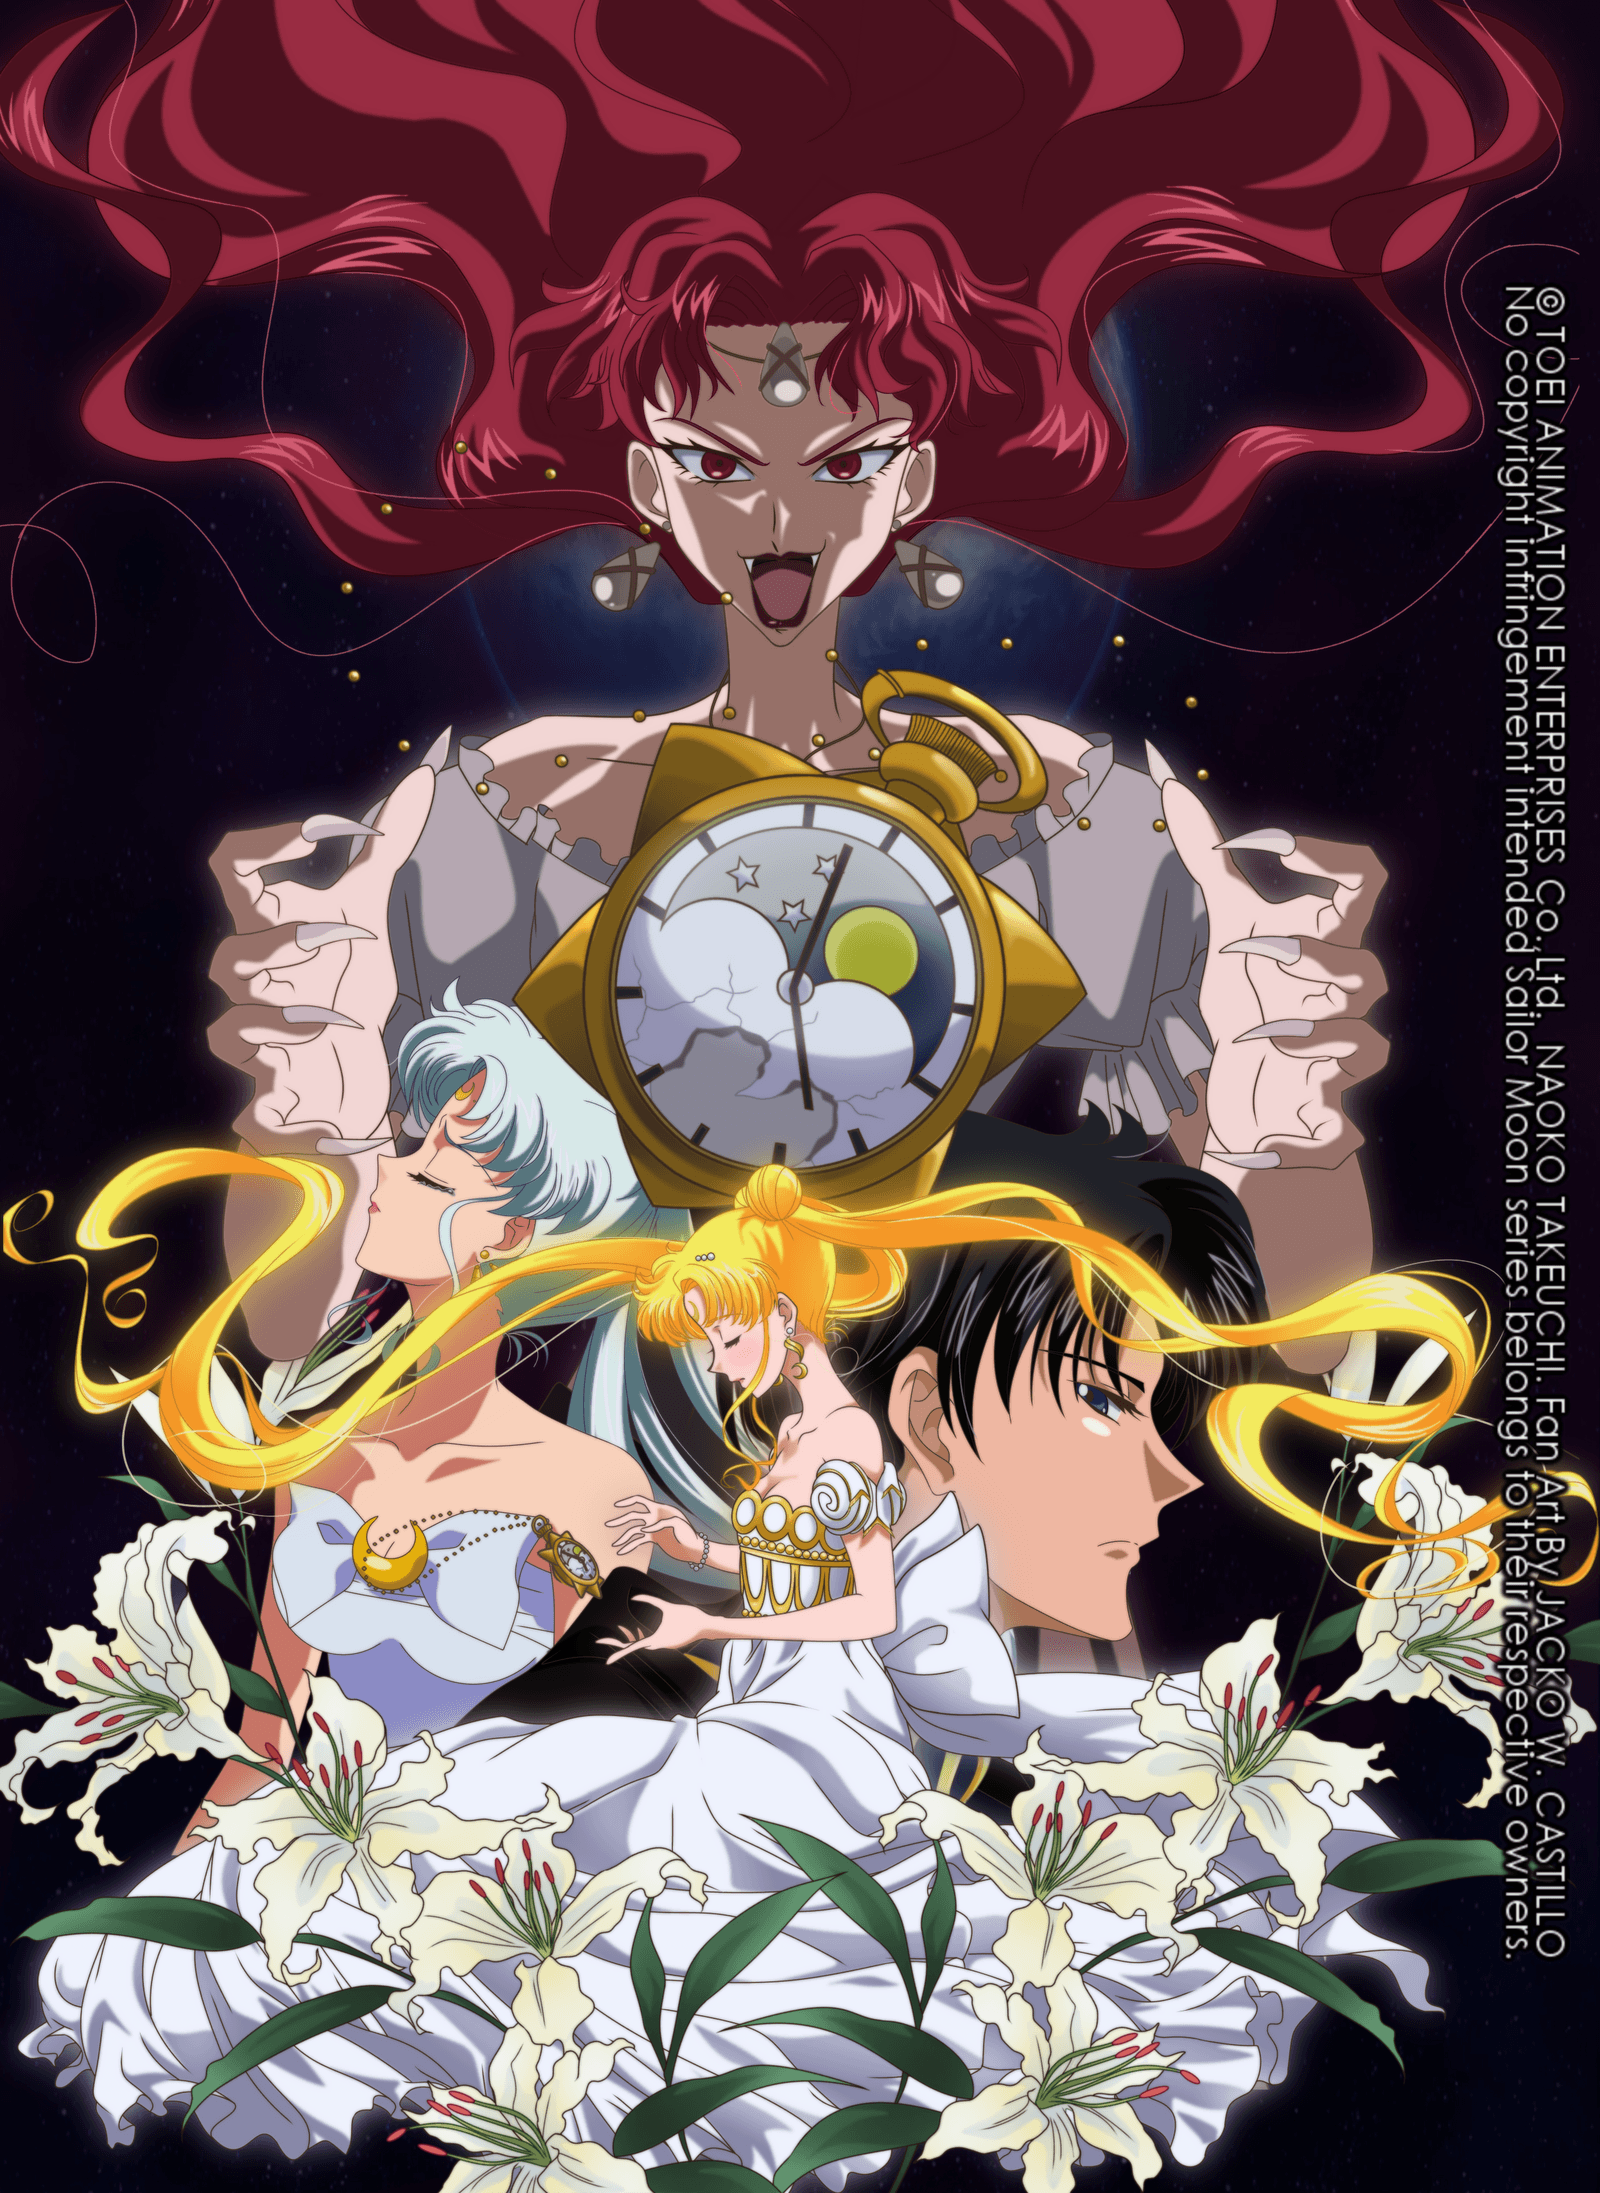 Sailor Moon Crystal Wallpaper